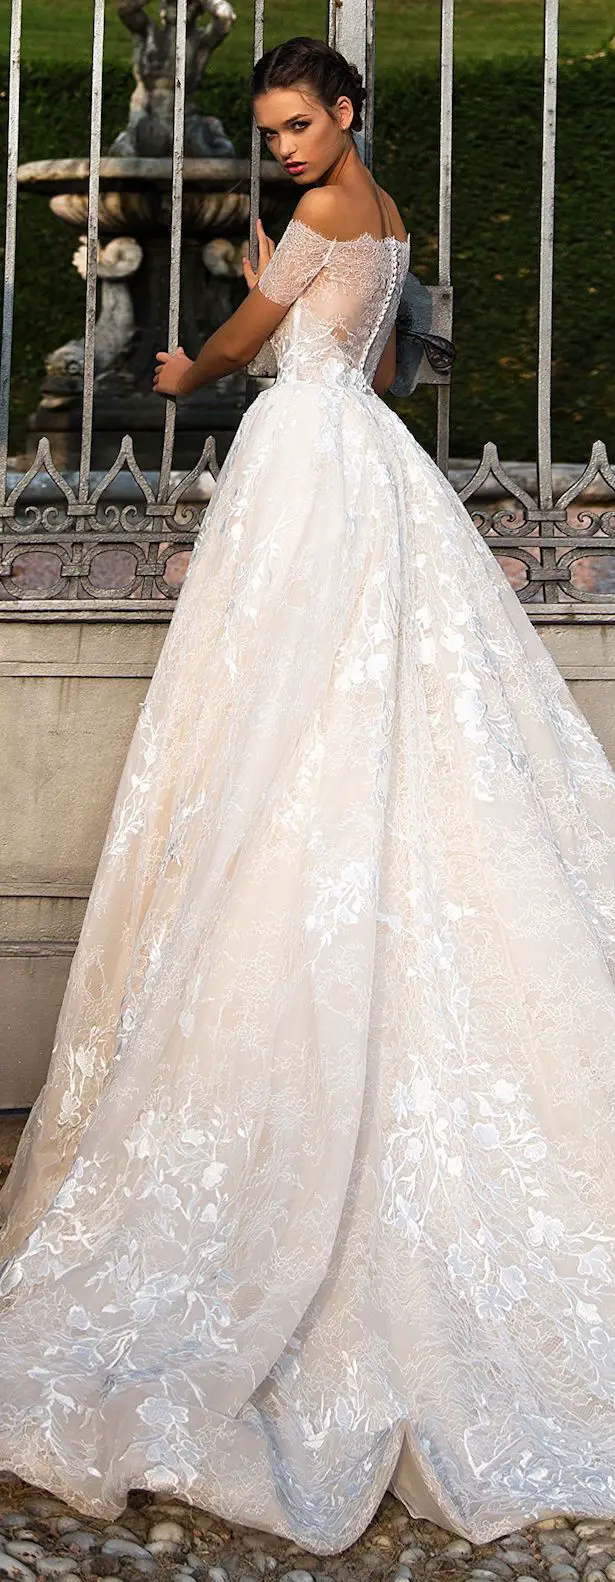 Wedding Dress by Milla Nova White Desire 2017 Bridal Collection - Adalla